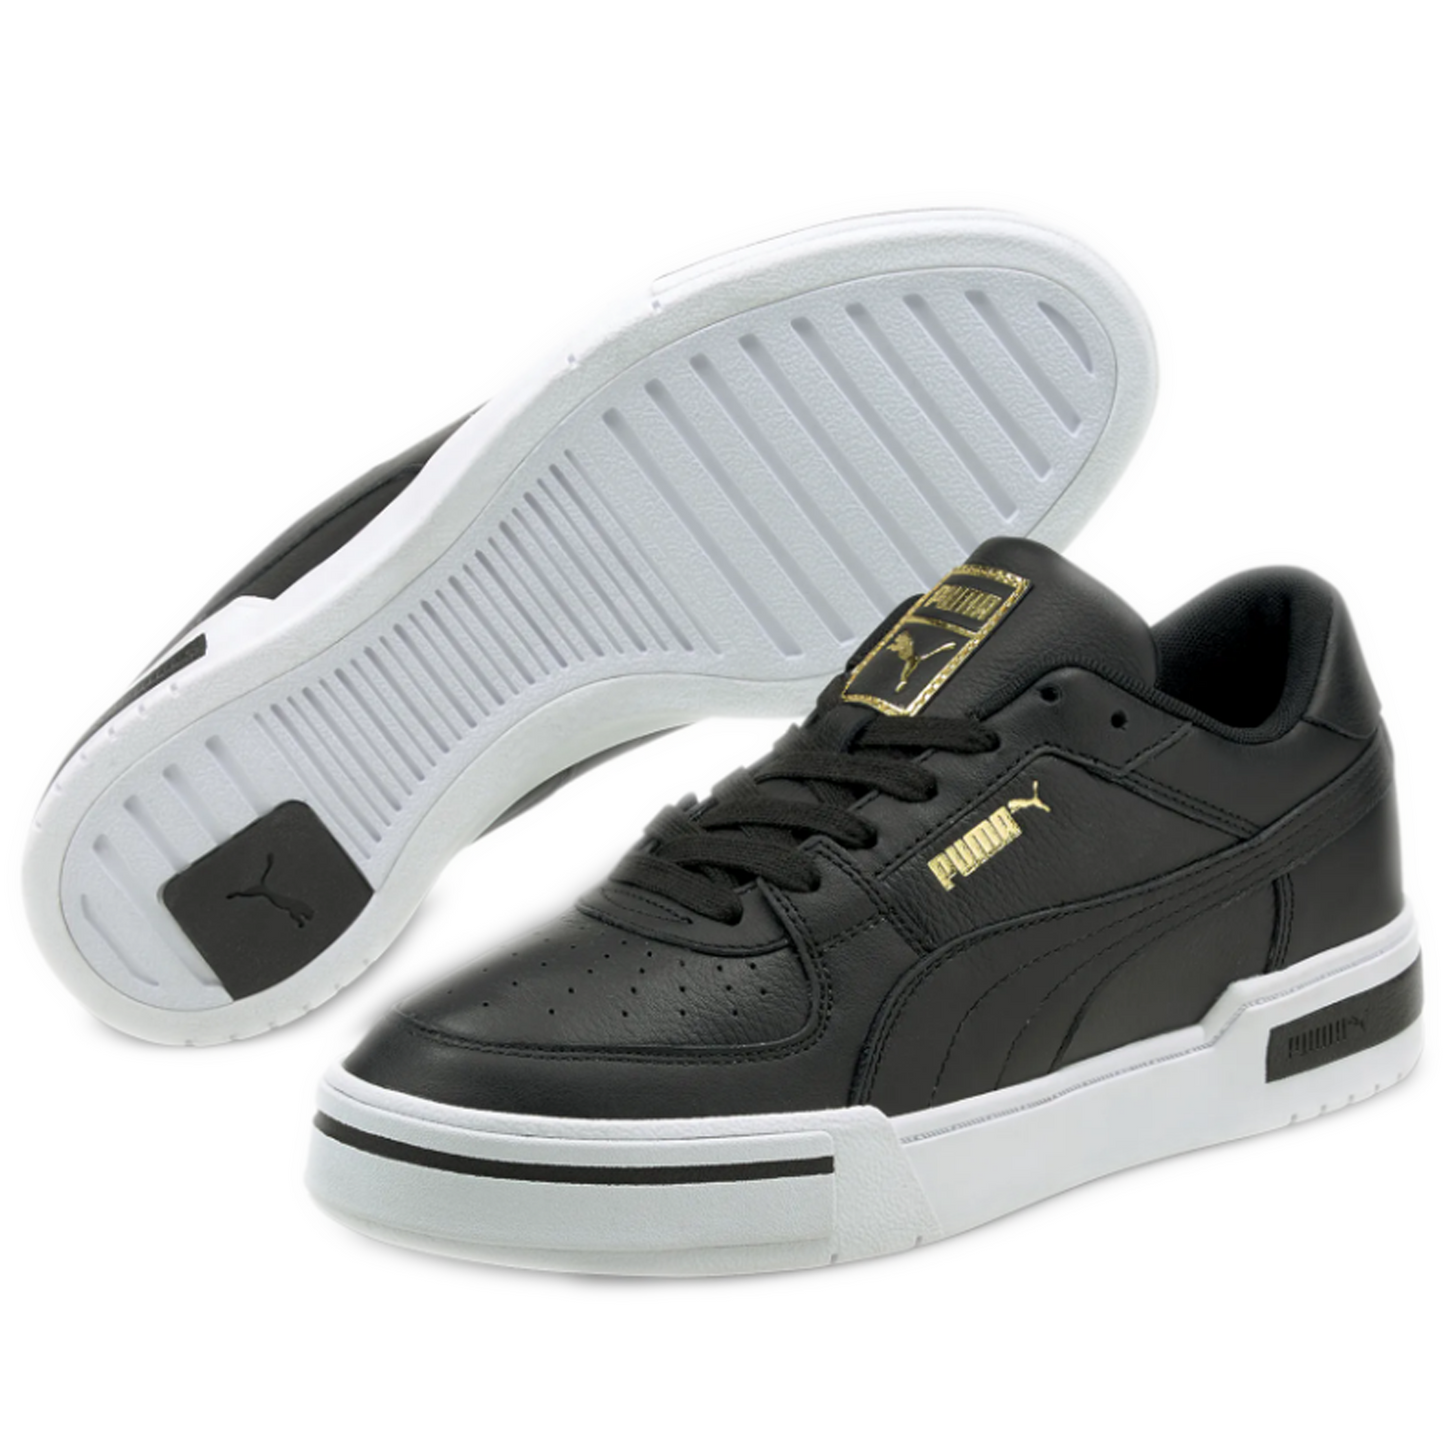 Kid's Puma CA Pro Classic Shoes - Black/ White